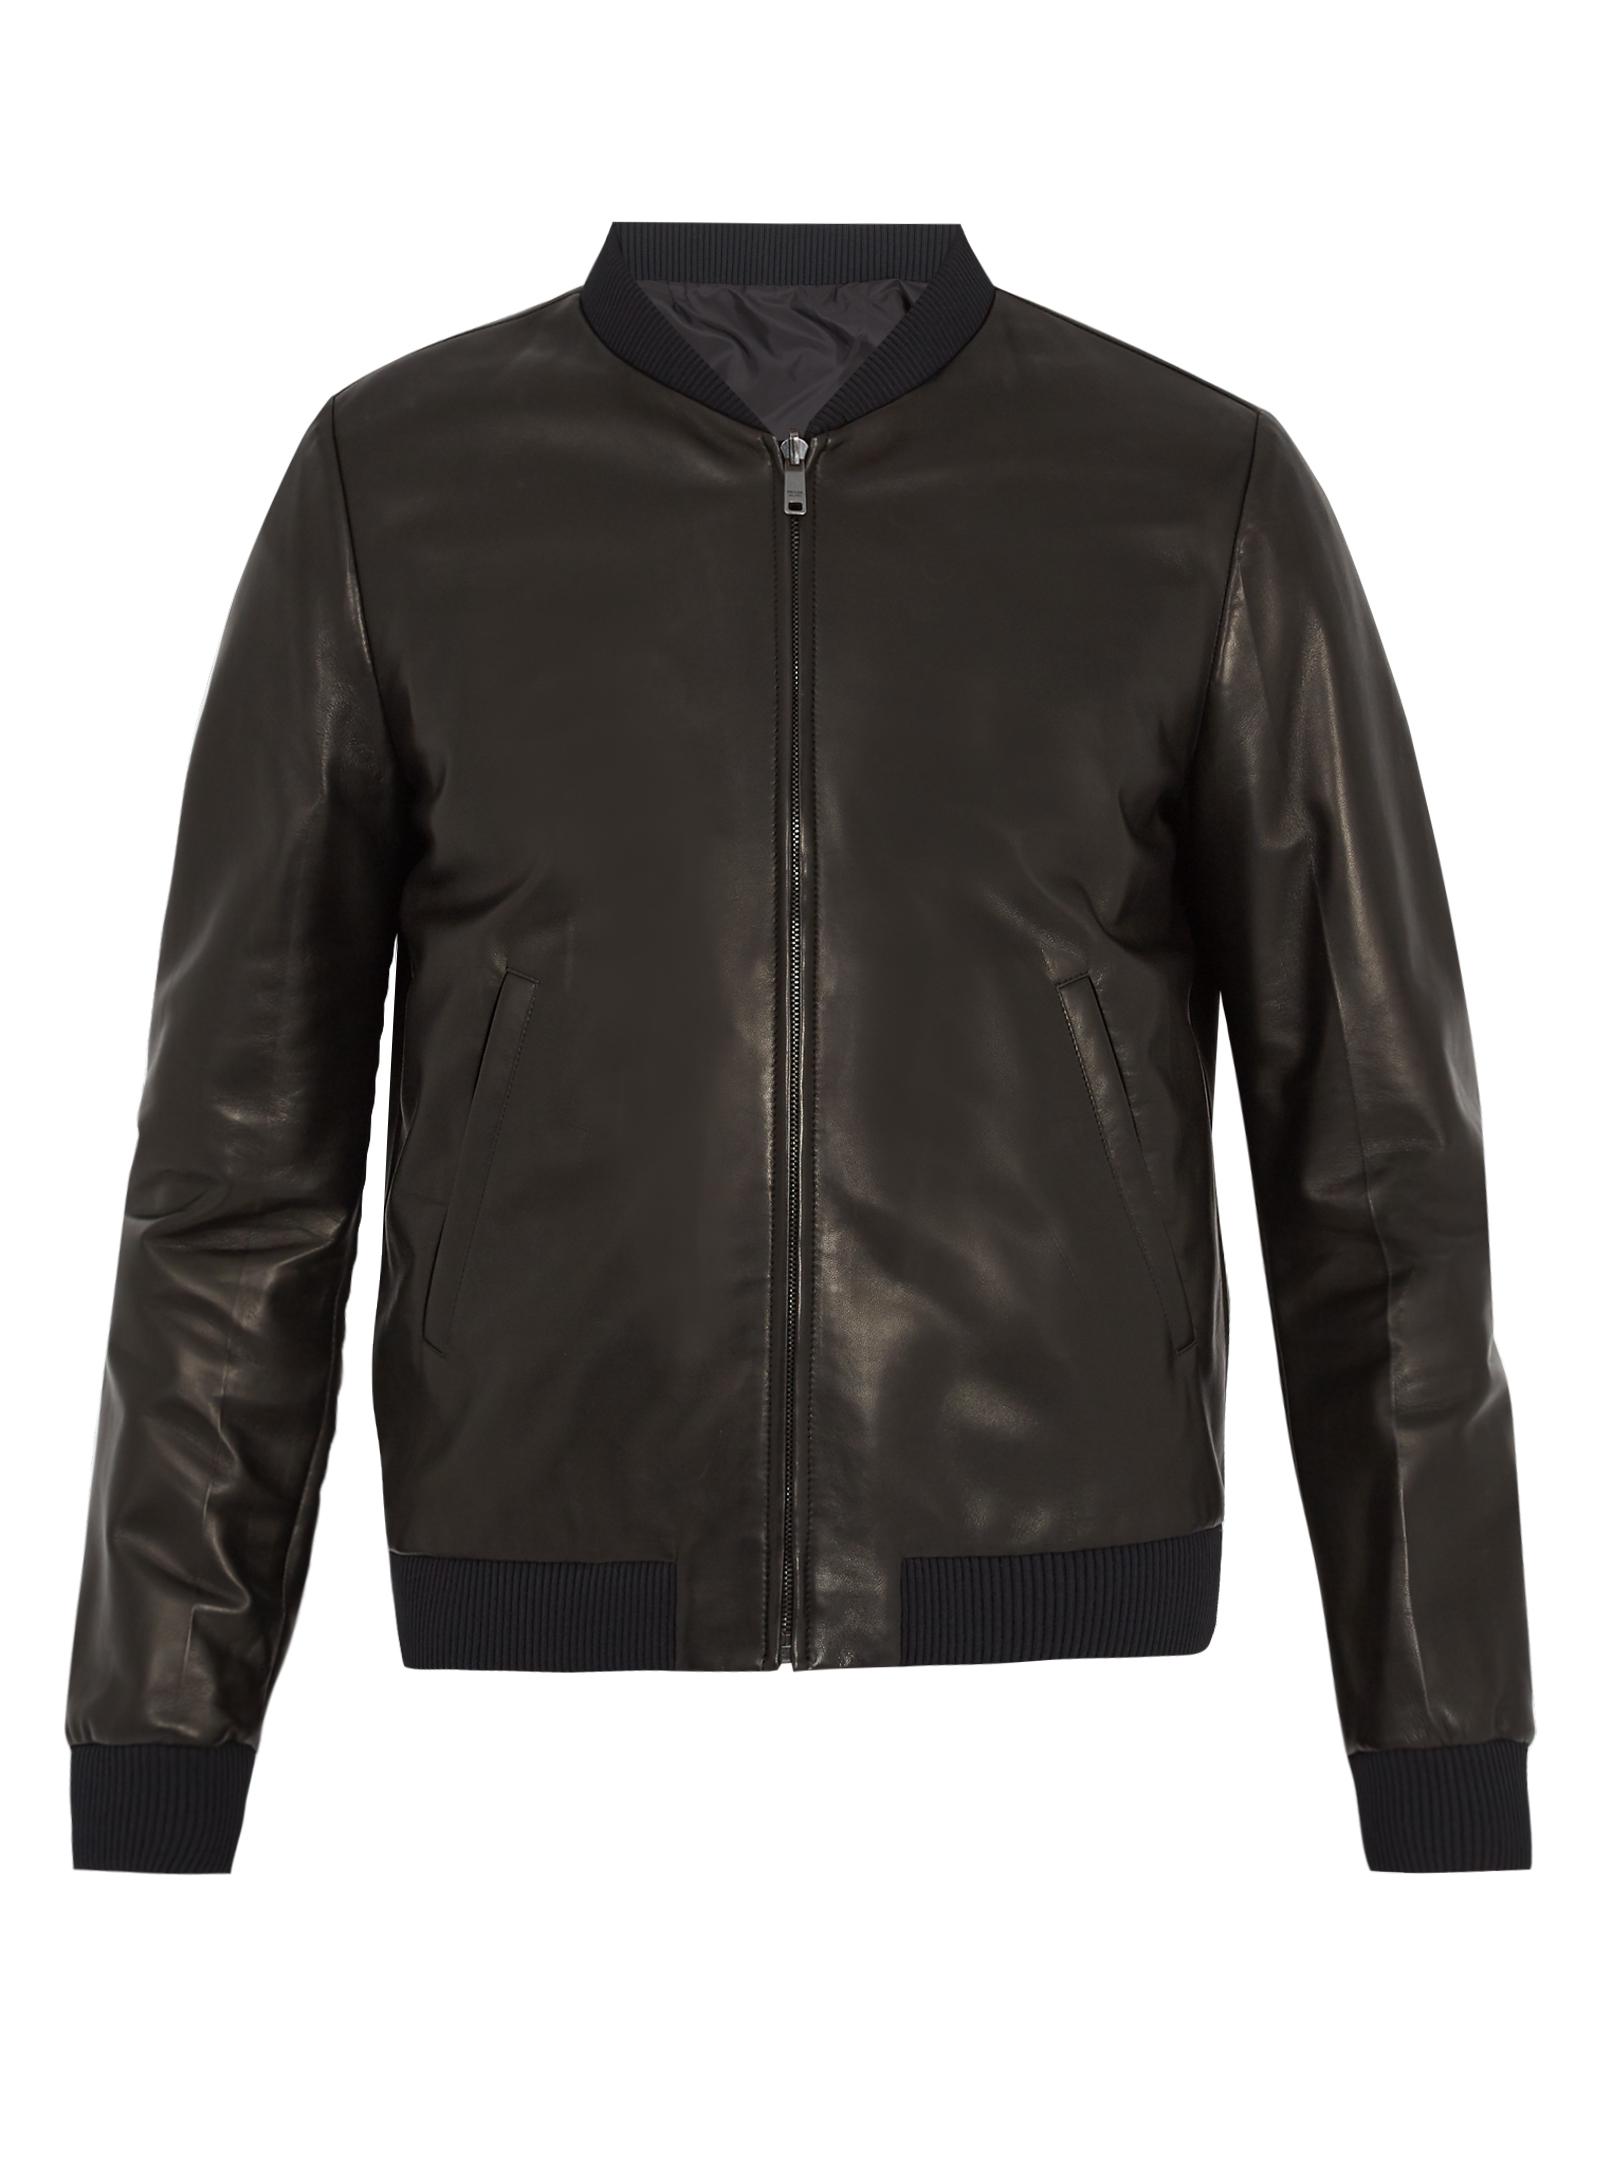 Prada Leather Bomber Jacket in Black for Men - Lyst